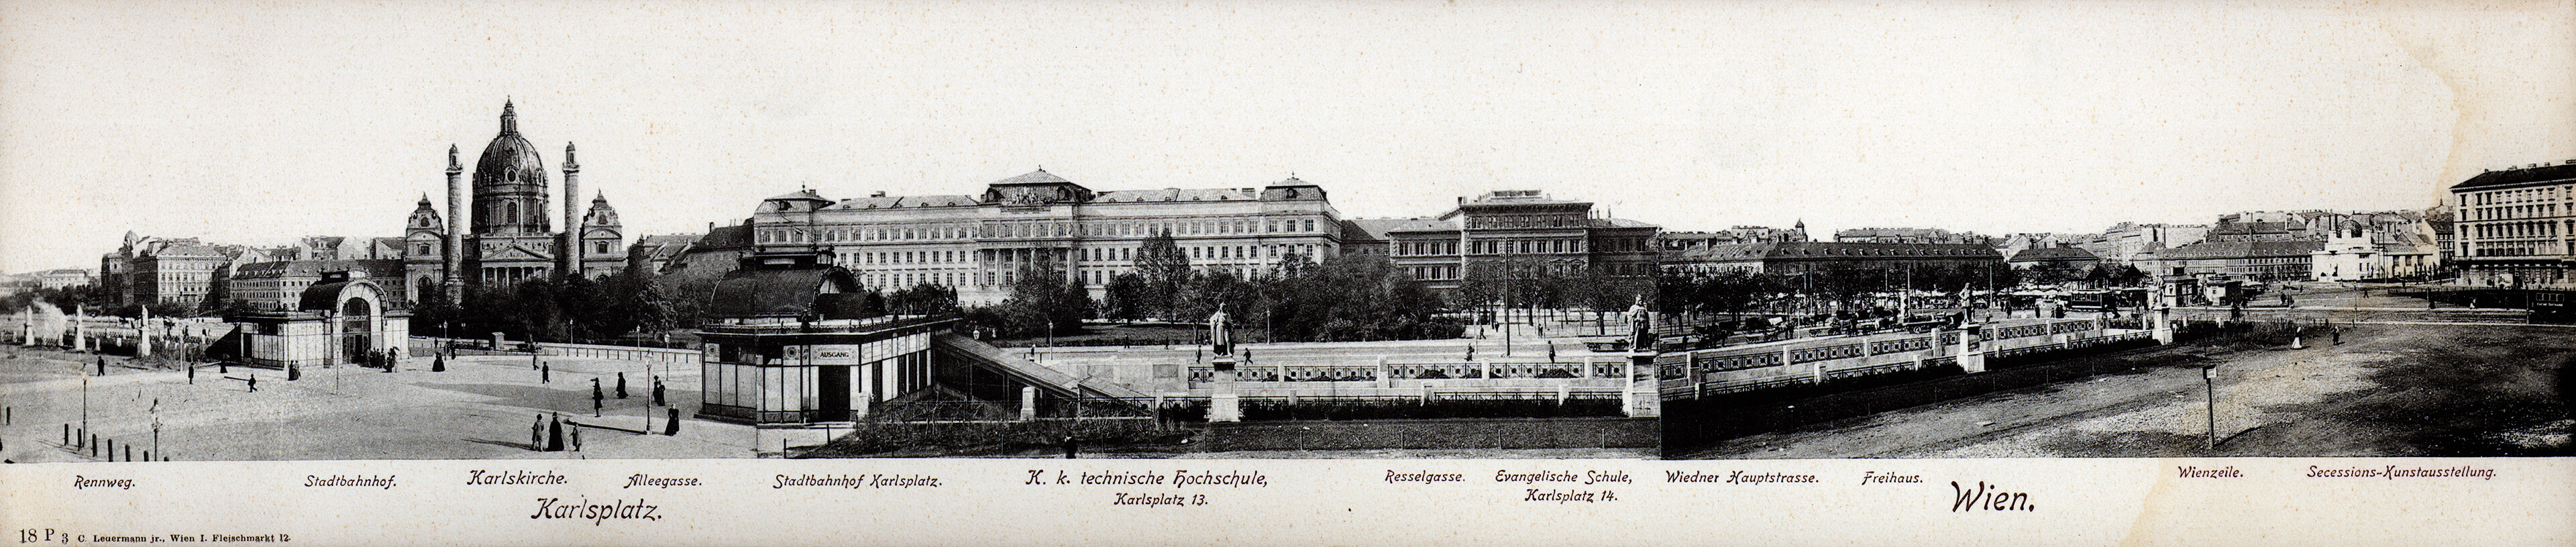 Panorama-Ansichtskarten vom Karlsplatz, 1902, Verlag: C. Ledermann, Wien Museum, Inv.-Nr. 216.995 bzw. Inv.-Nr. 216.996 